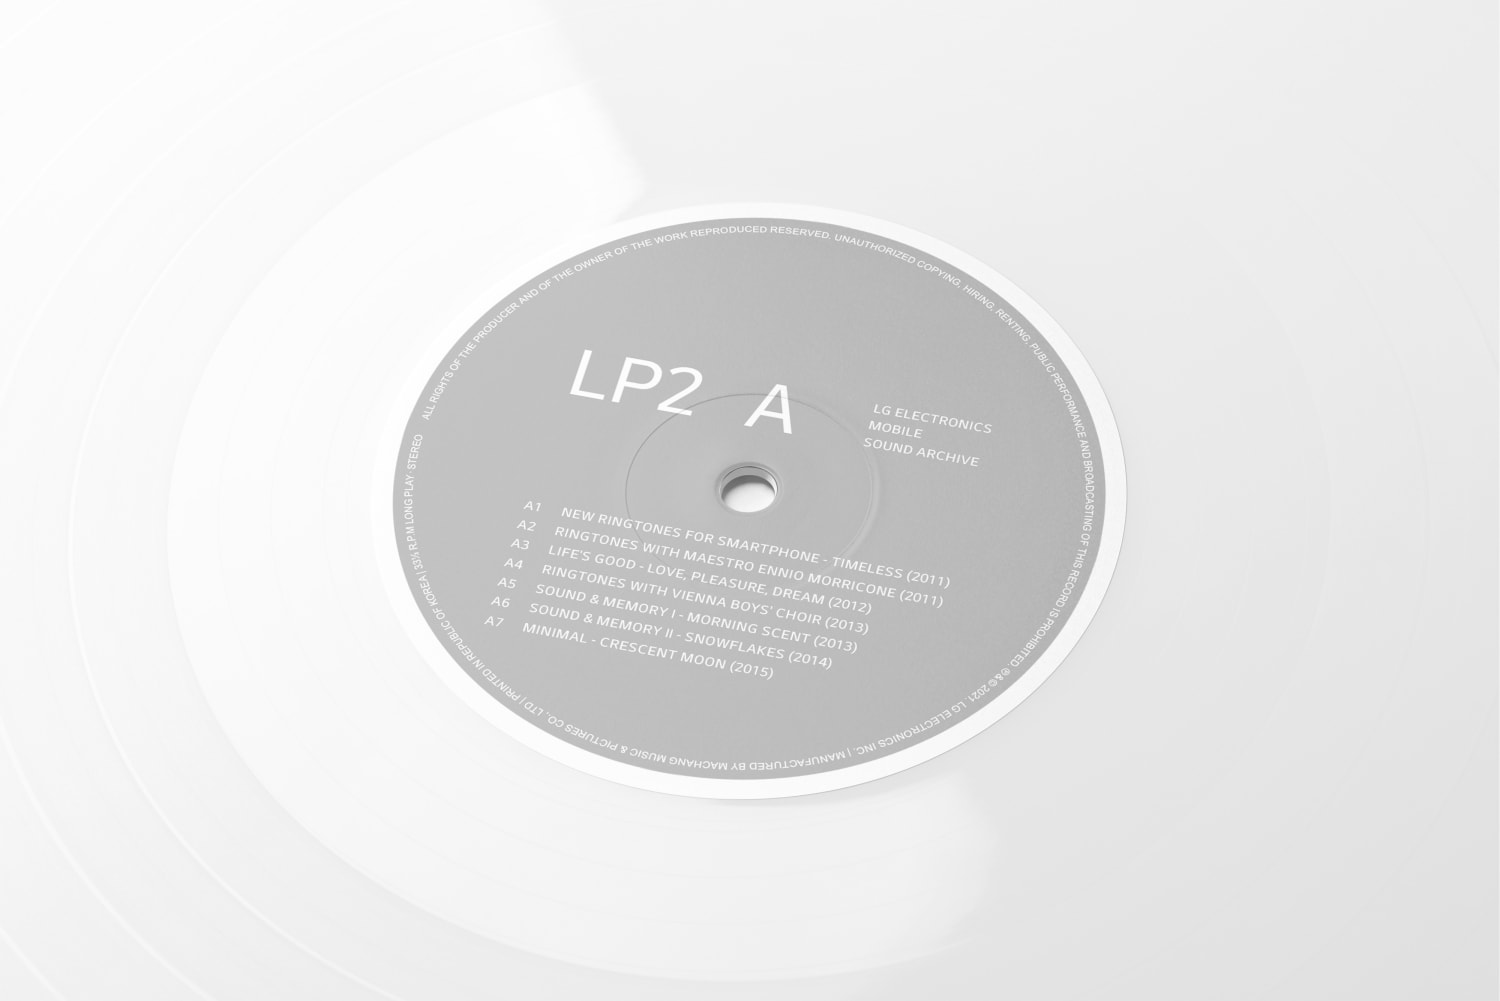 ‘LG 모바일 사운드 아카이브’ 한정판 바이닐 LP 제작